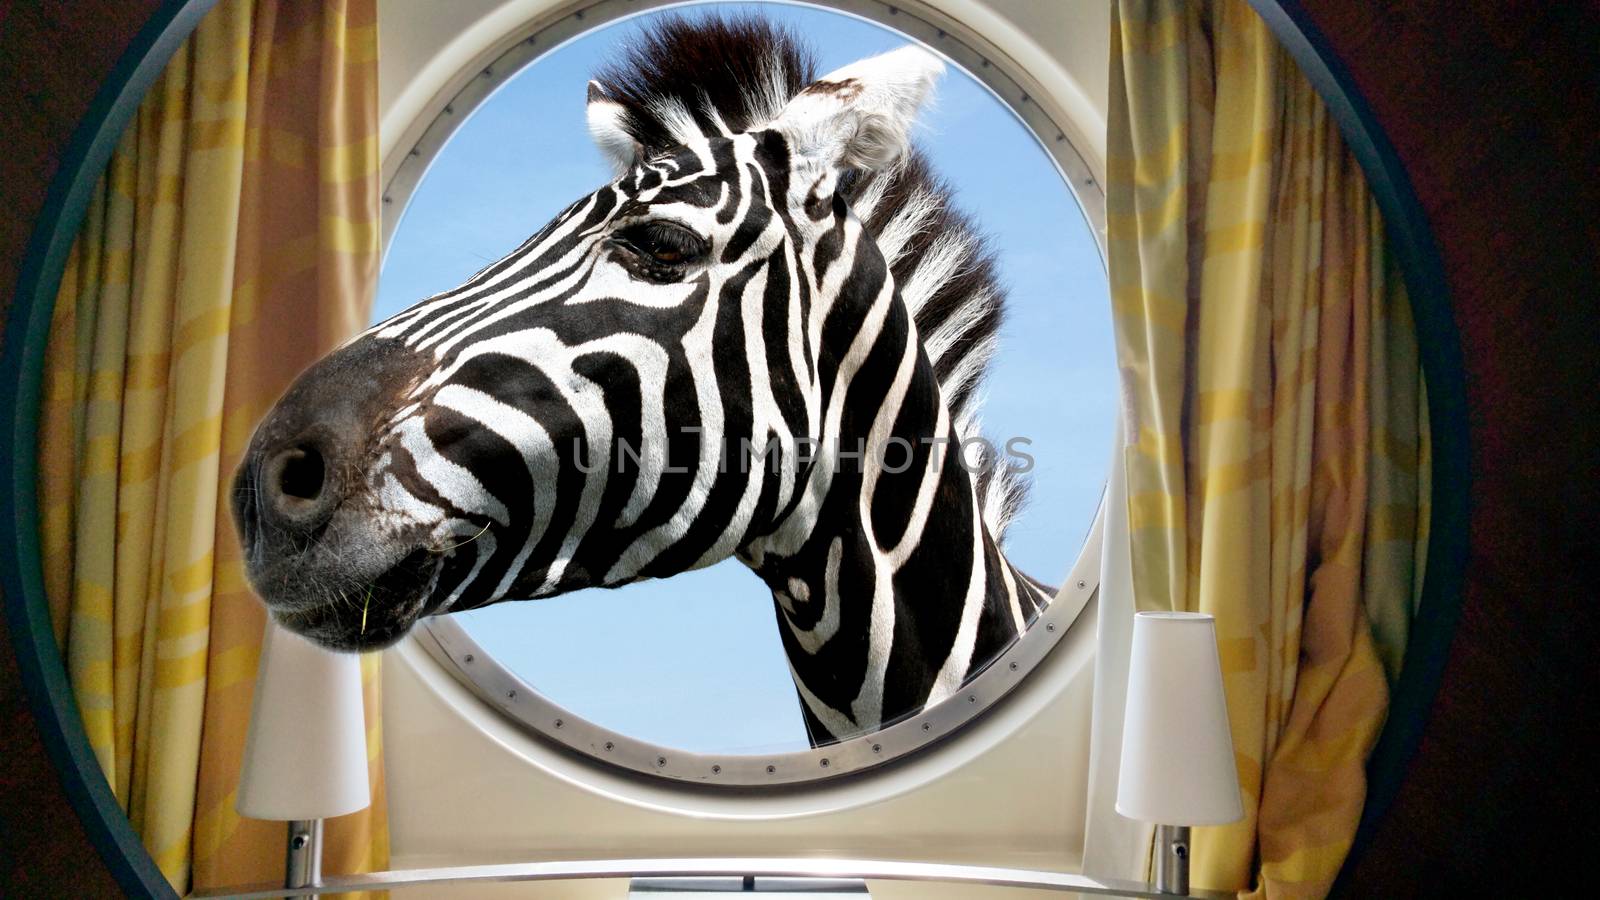 zebra face in the round ship porthole.